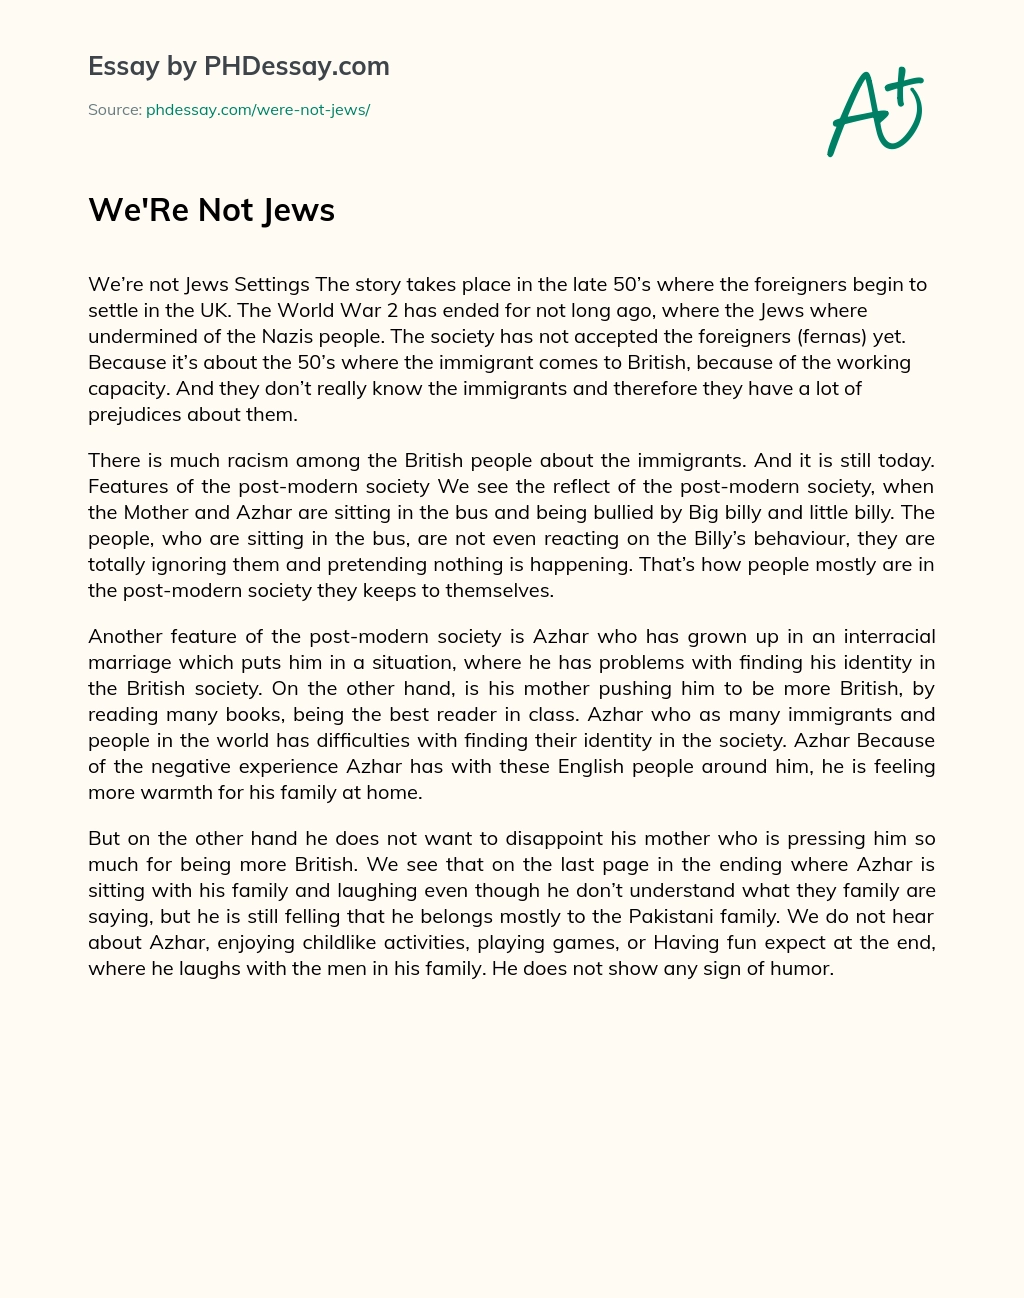 We’Re Not Jews essay